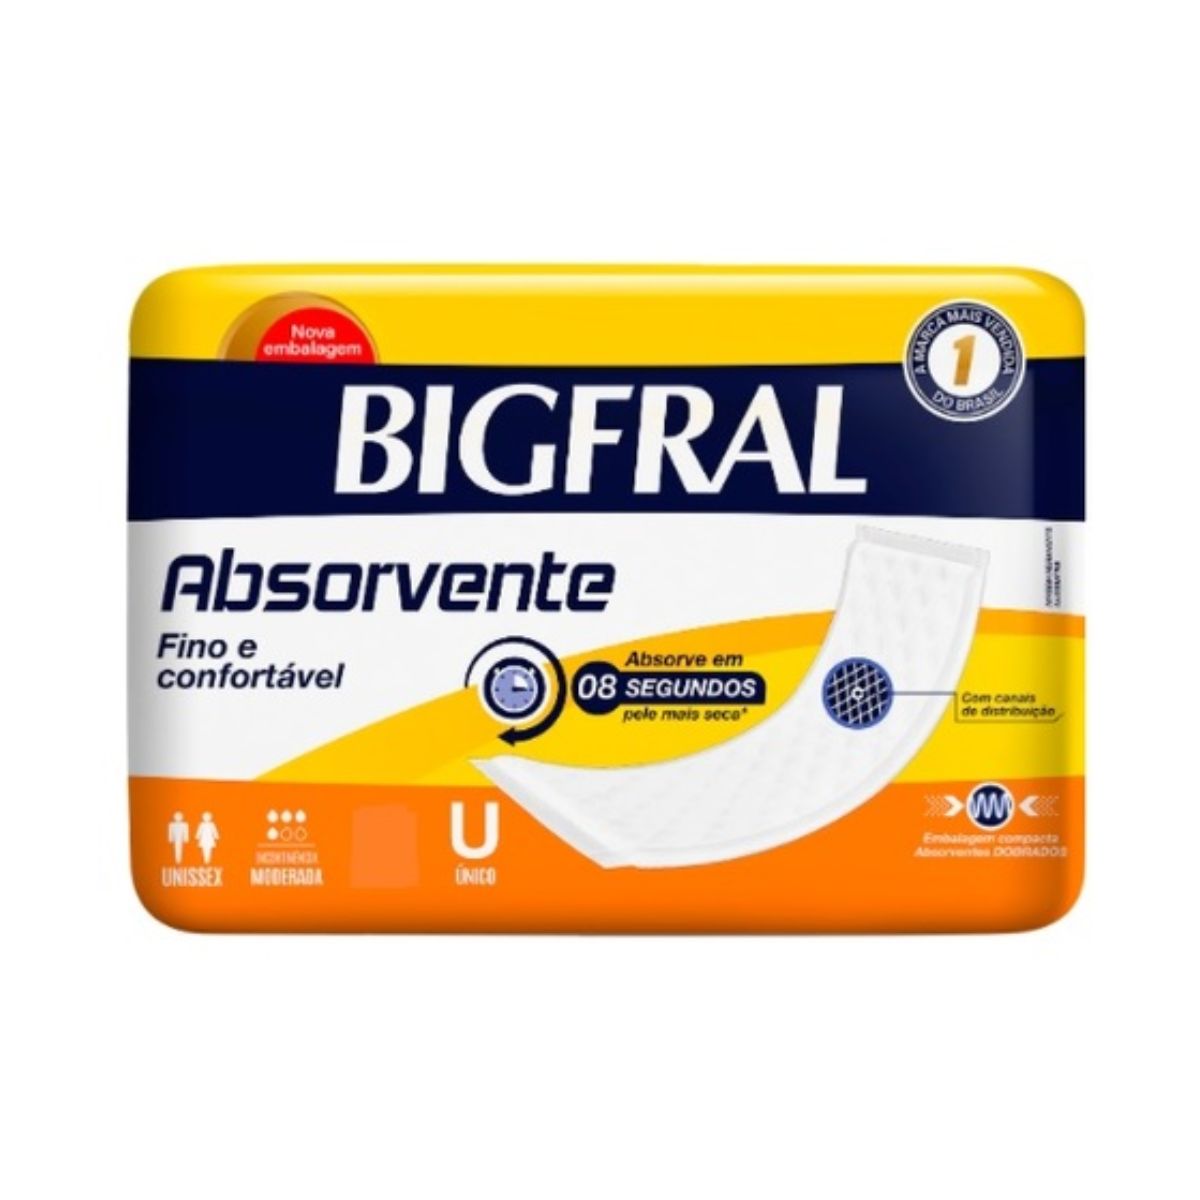 absorvente-bigfral-20-unidades-1.jpg